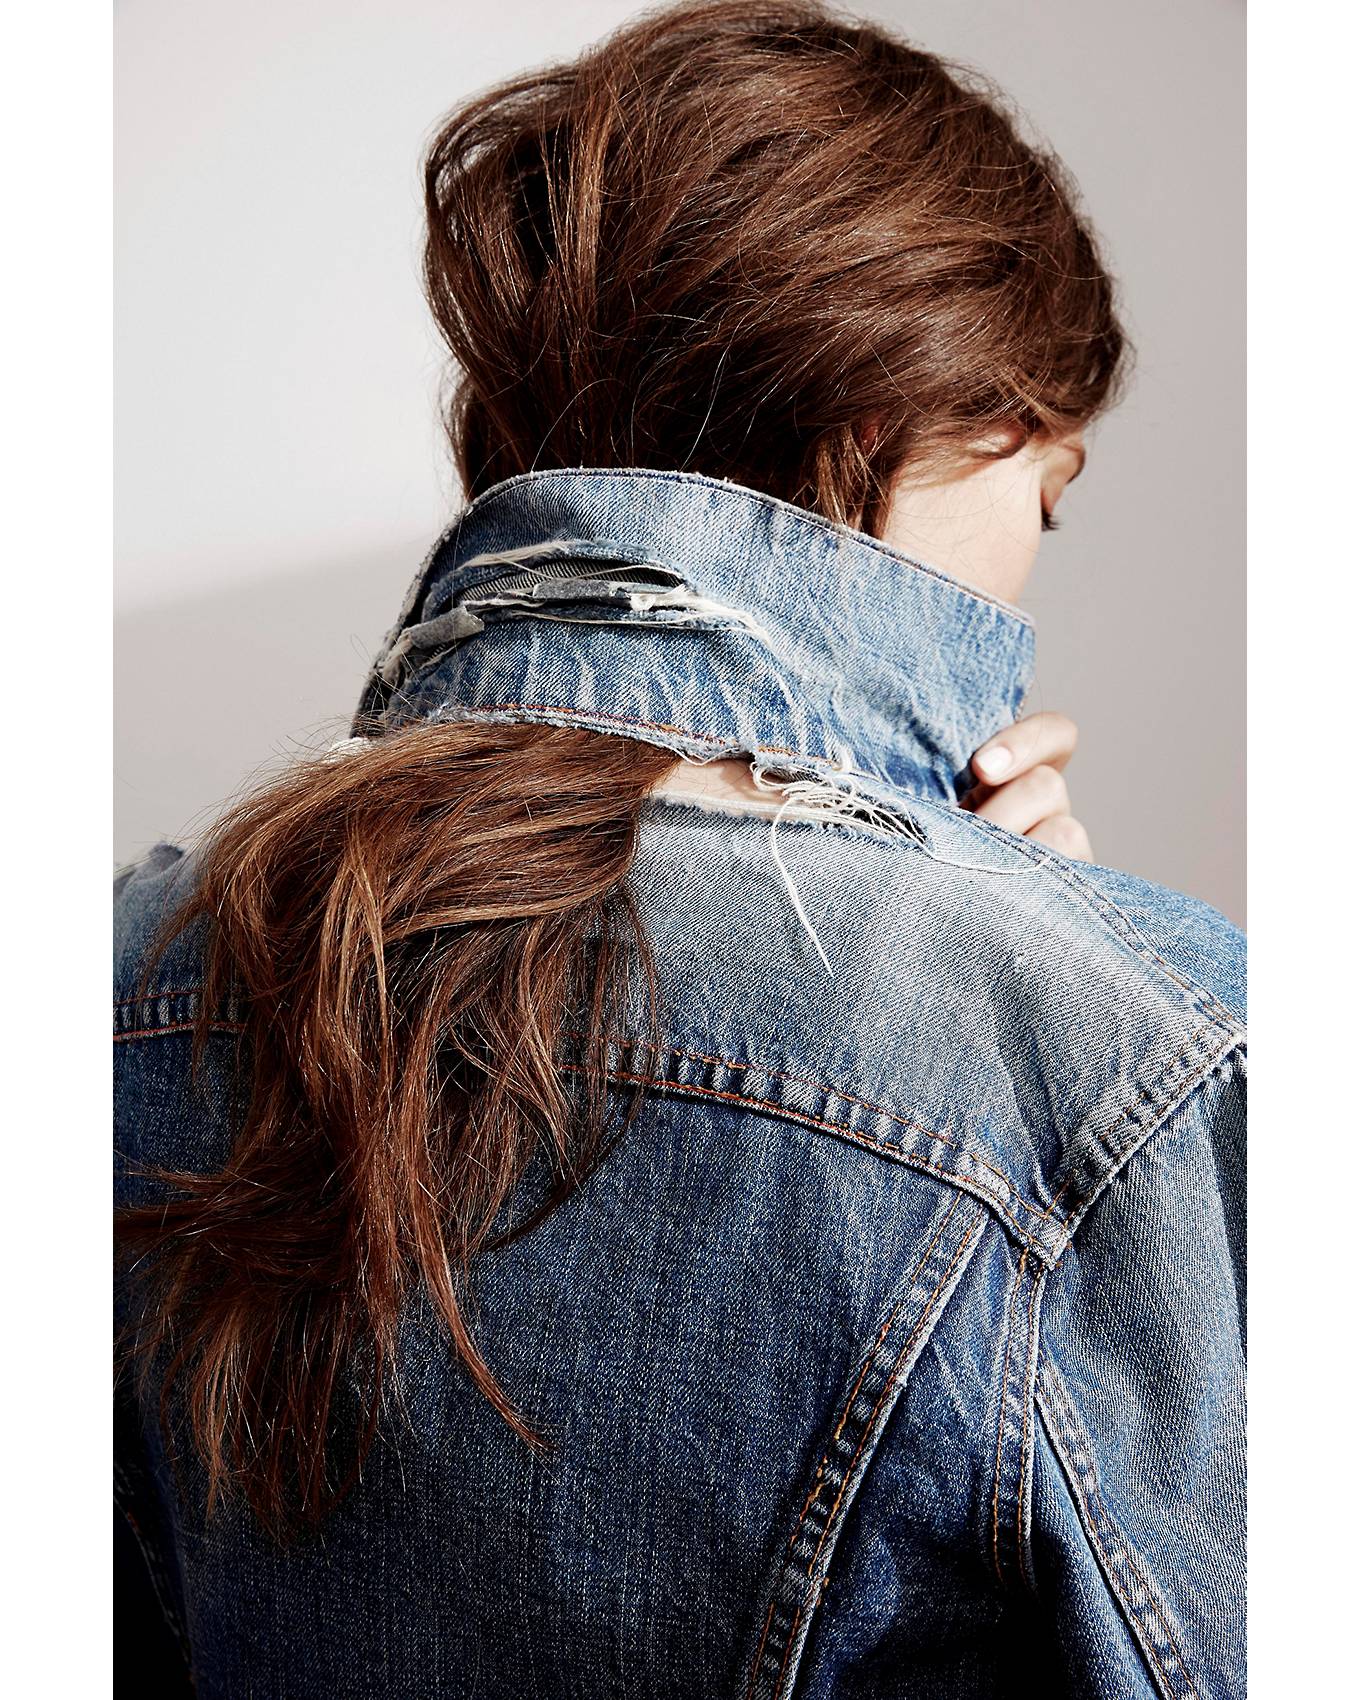 denim jacket. women's hair caught through the back